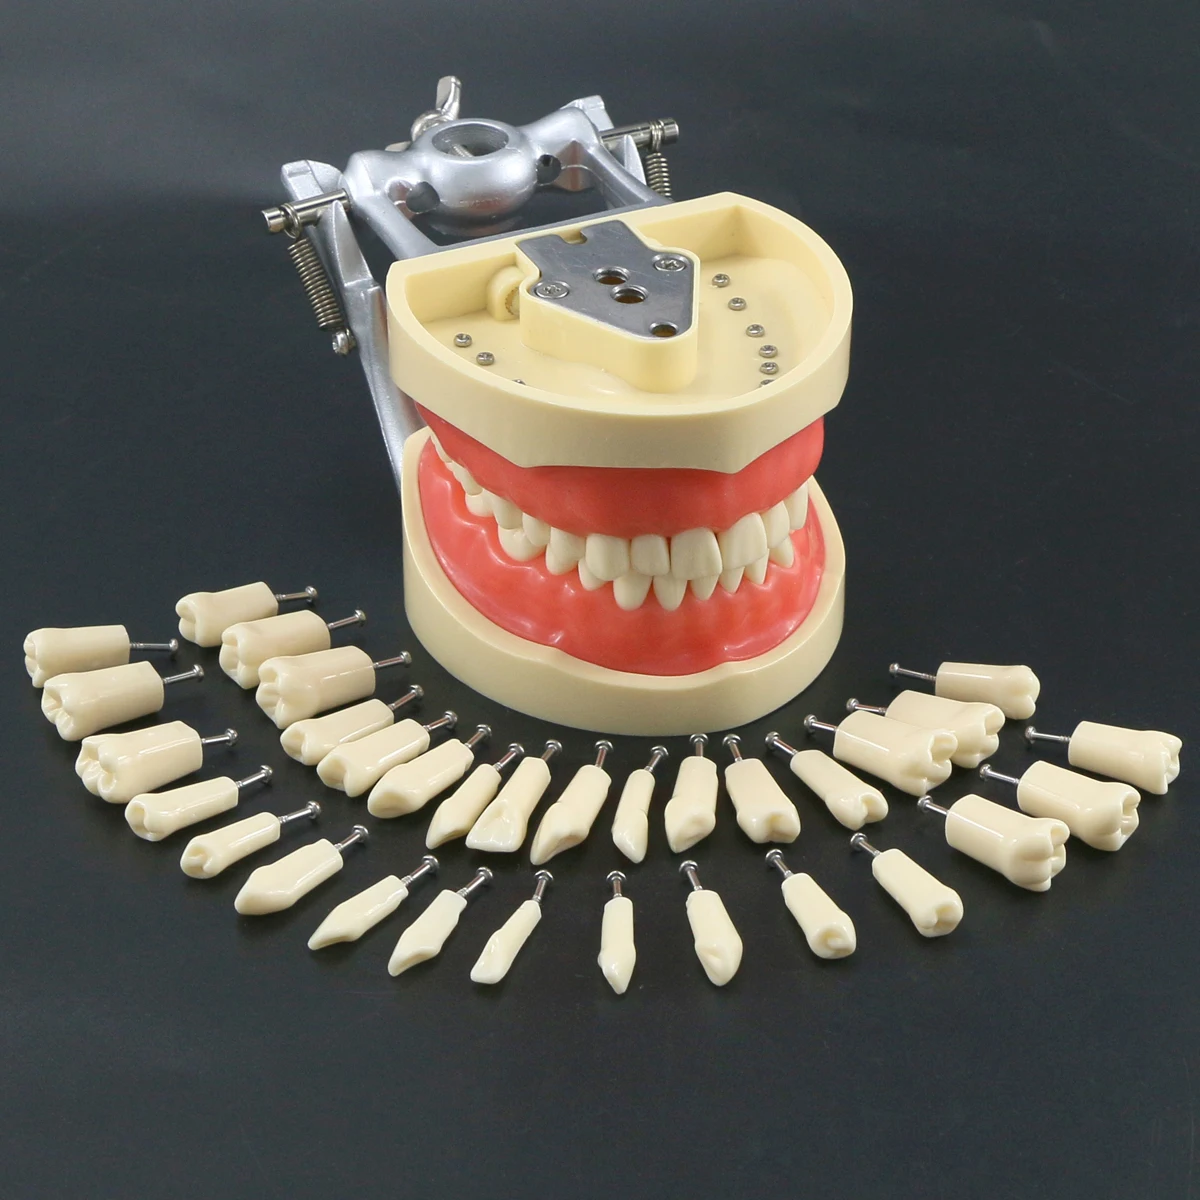 Стоматологичен модел Typodont с подвижни ввинчивающимися зъби Kilgore NISSIN 200 Type 8012 32 зъба